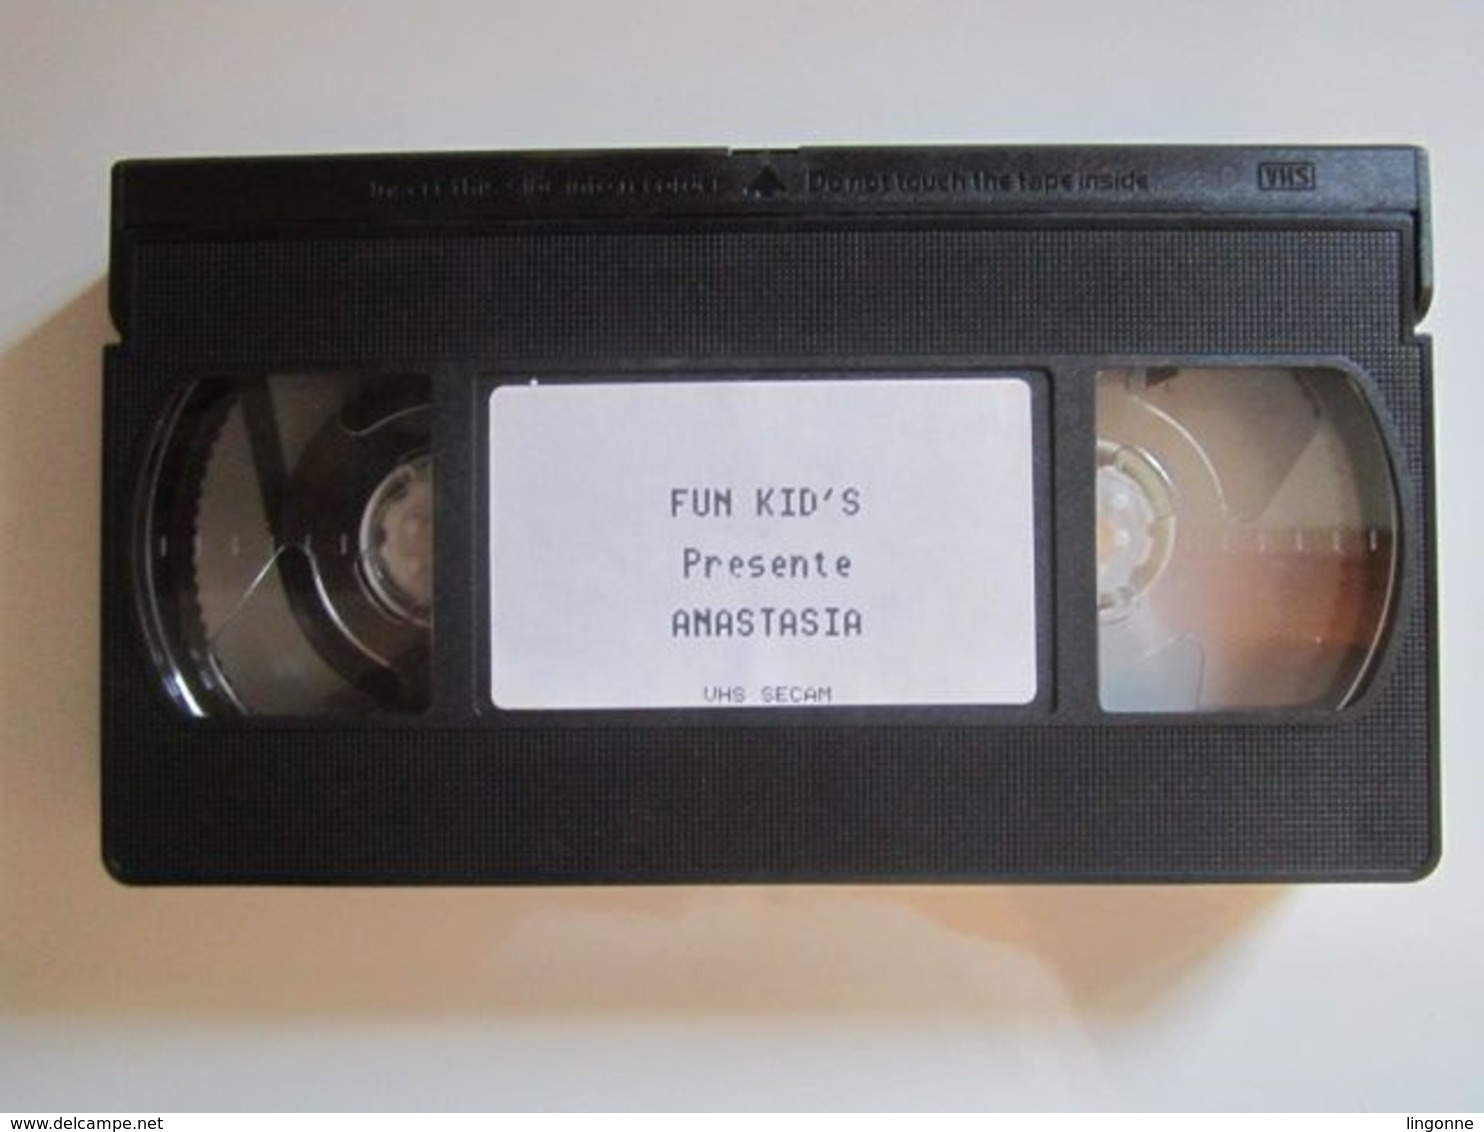 1998 CASSETTE VIDEO VHS  ANASTASIA - Cartoons